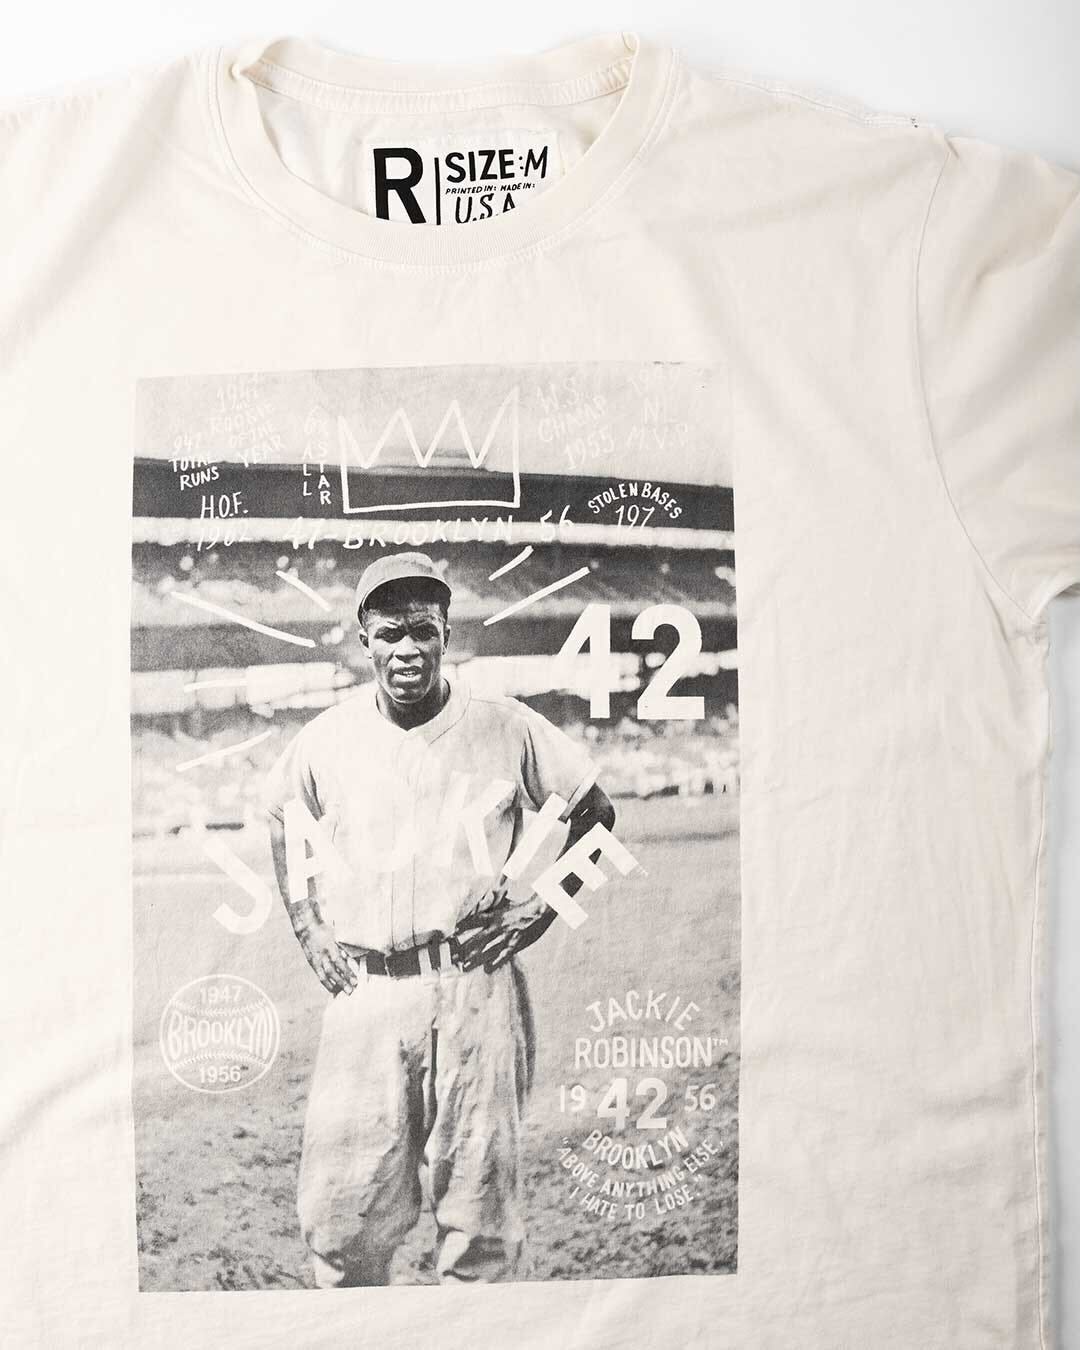 Jackie Robinson #42 Brooklyn Photo Tee - Roots of Fight